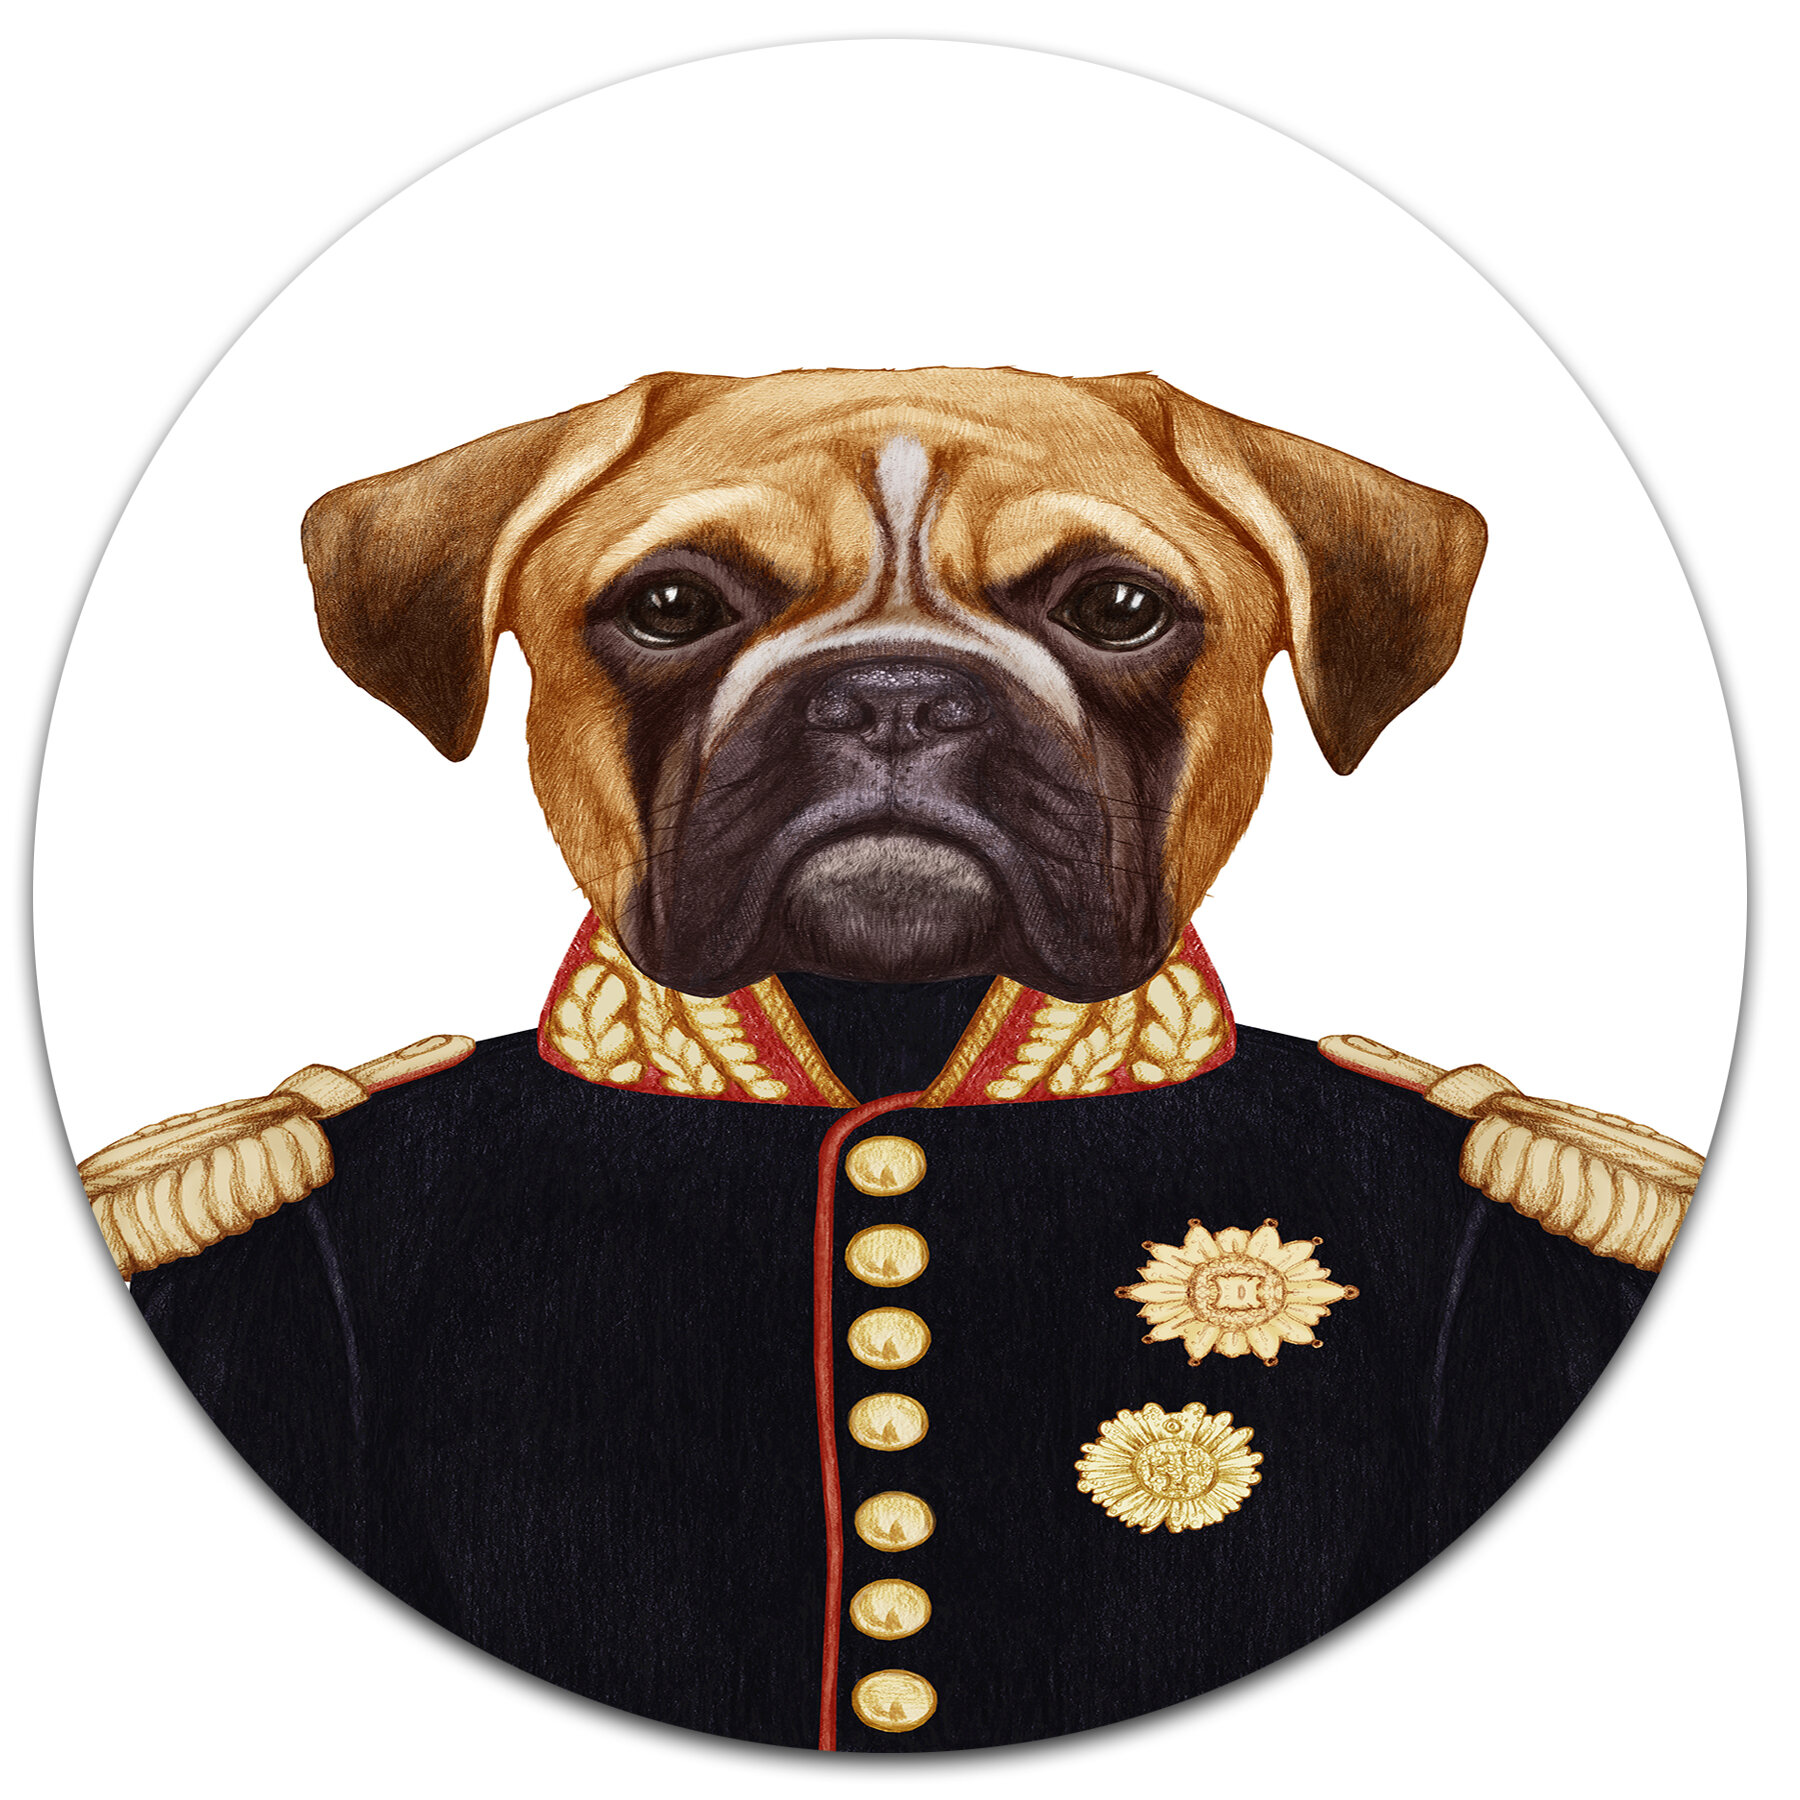 Designart Funny Boxer Dog In Military Uniform Graphic Art Print On Metal Wayfair